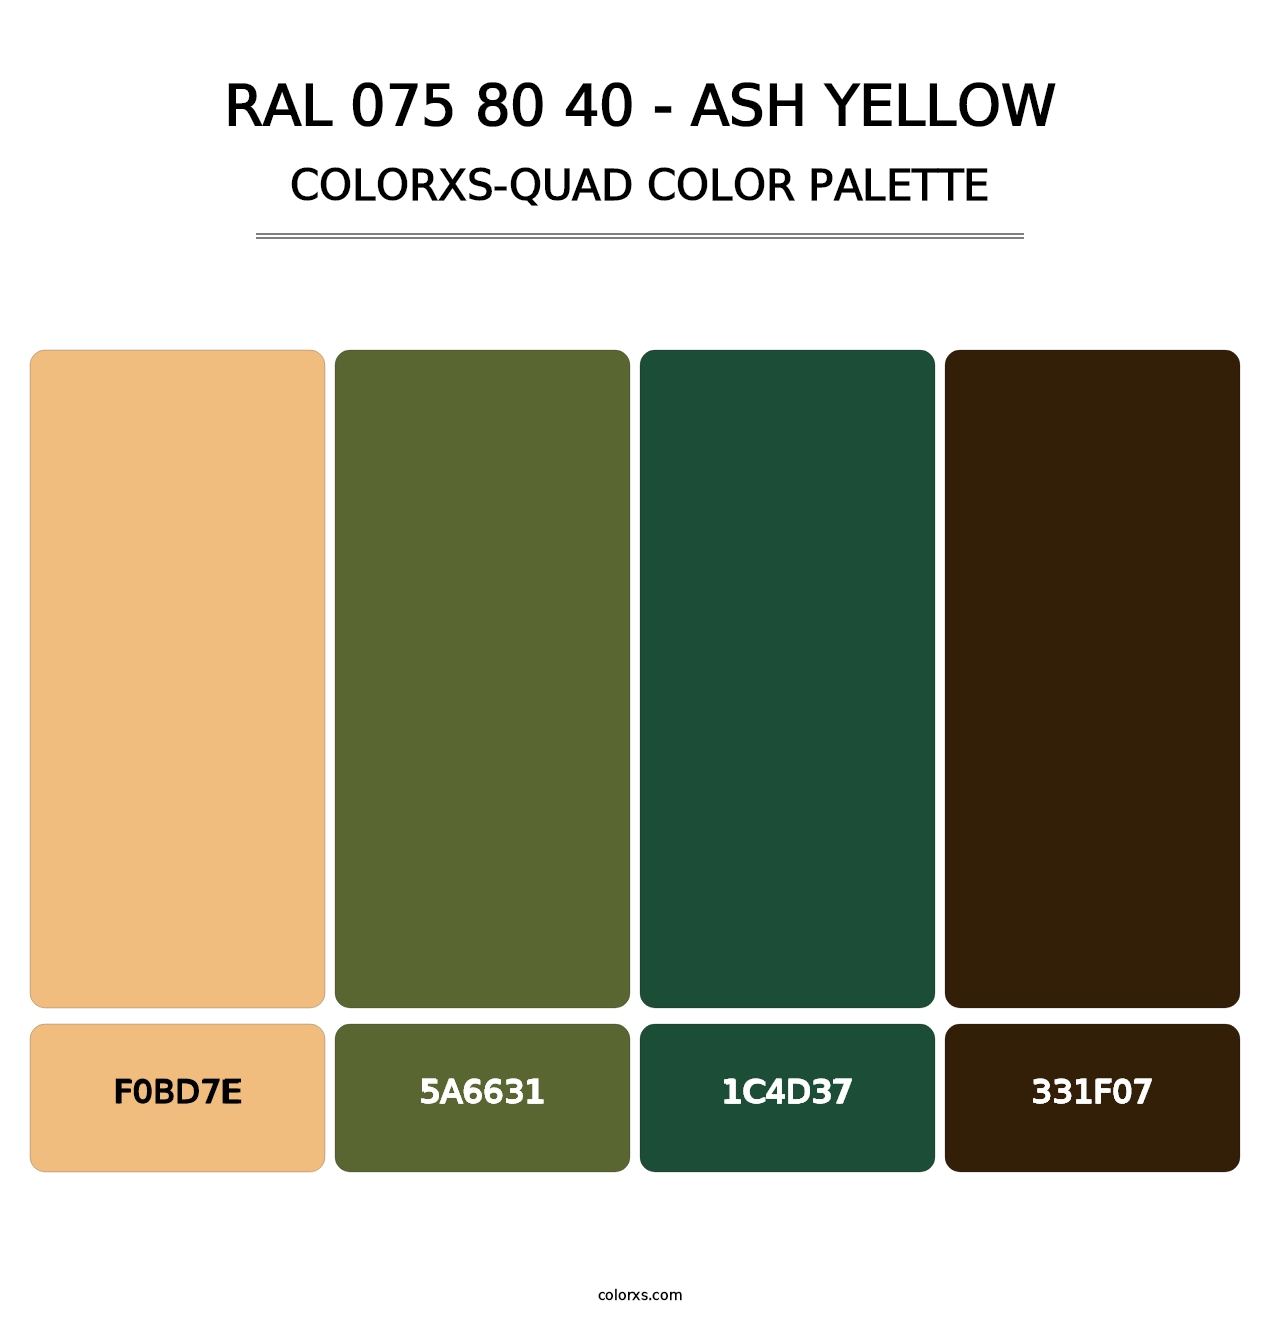 RAL 075 80 40 - Ash Yellow - Colorxs Quad Palette